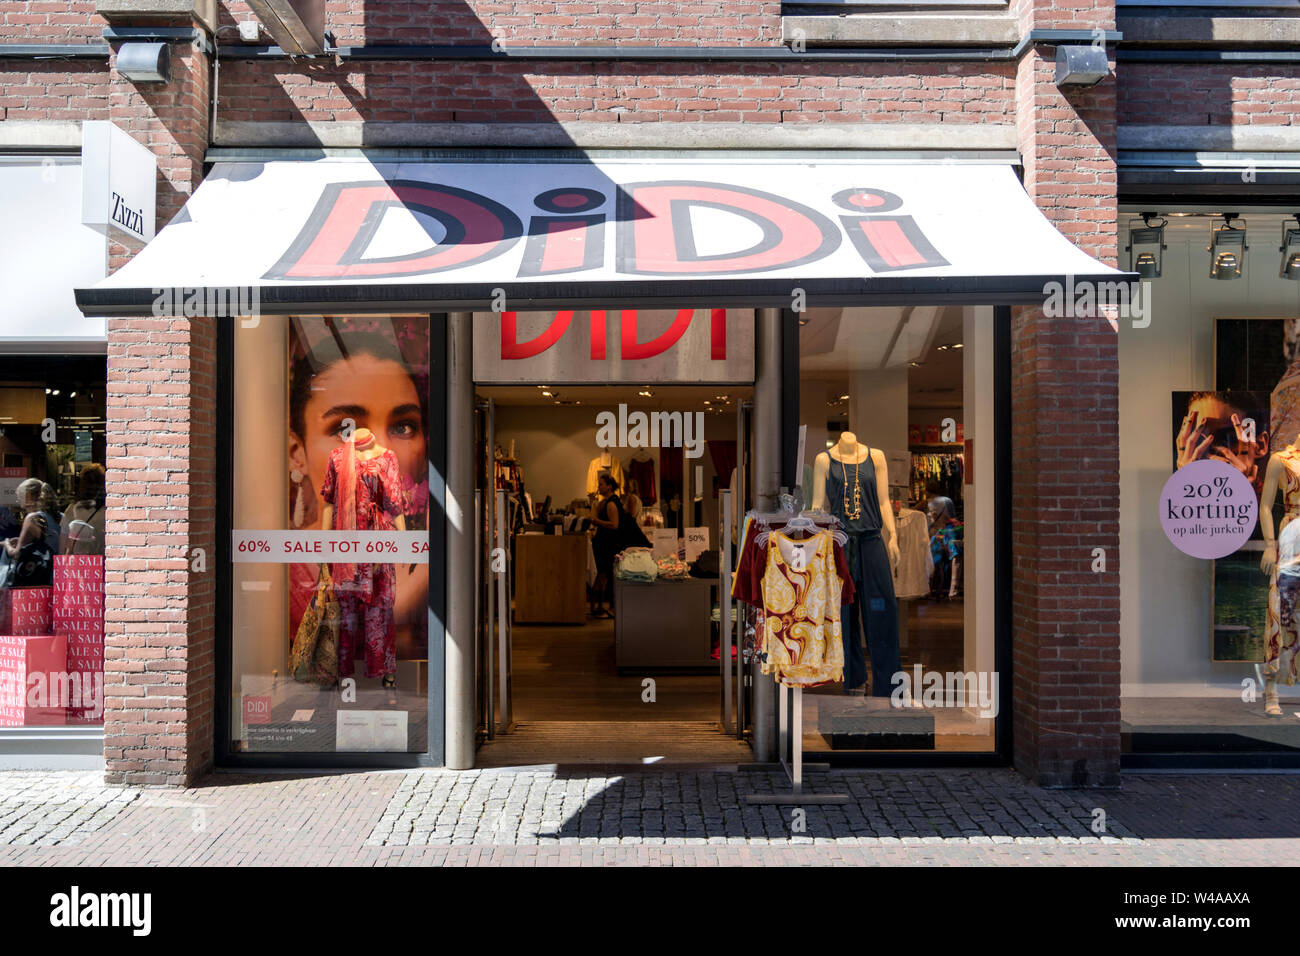 manipuleren opvolger De Alpen Dutch clothing retailer hi-res stock photography and images - Alamy